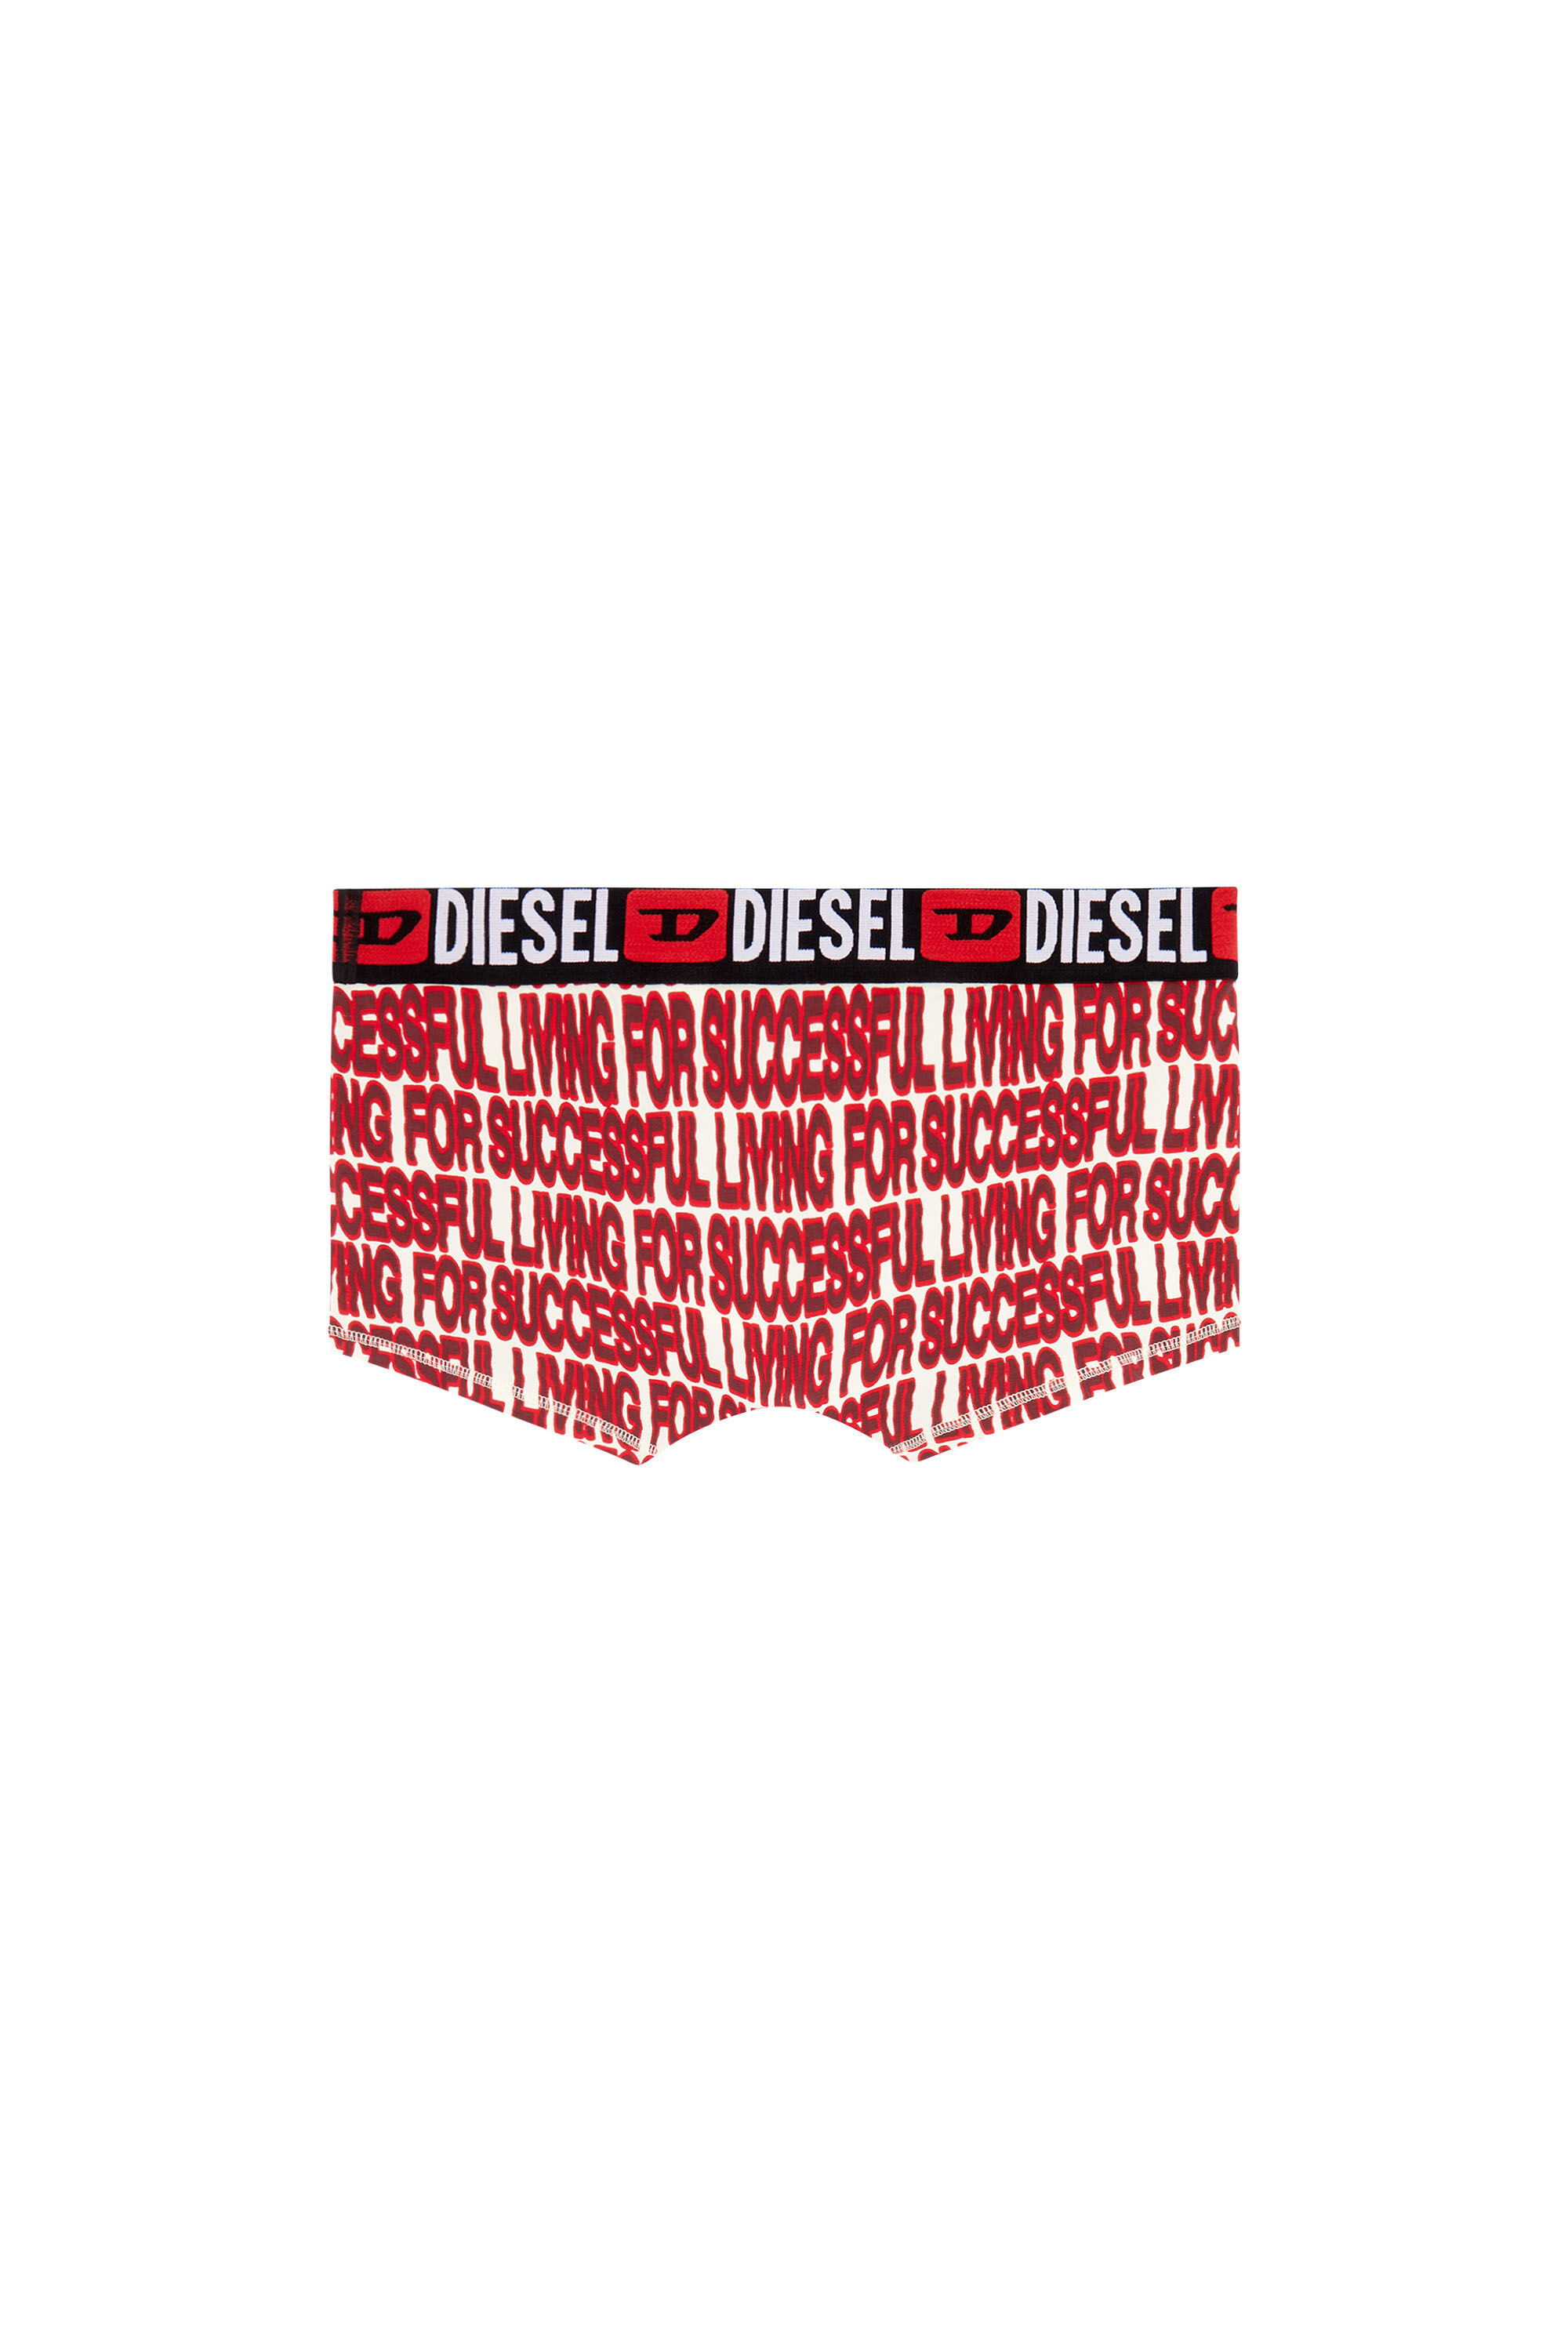 Diesel - UMBX-DAMIEN, Red/White - Image 2